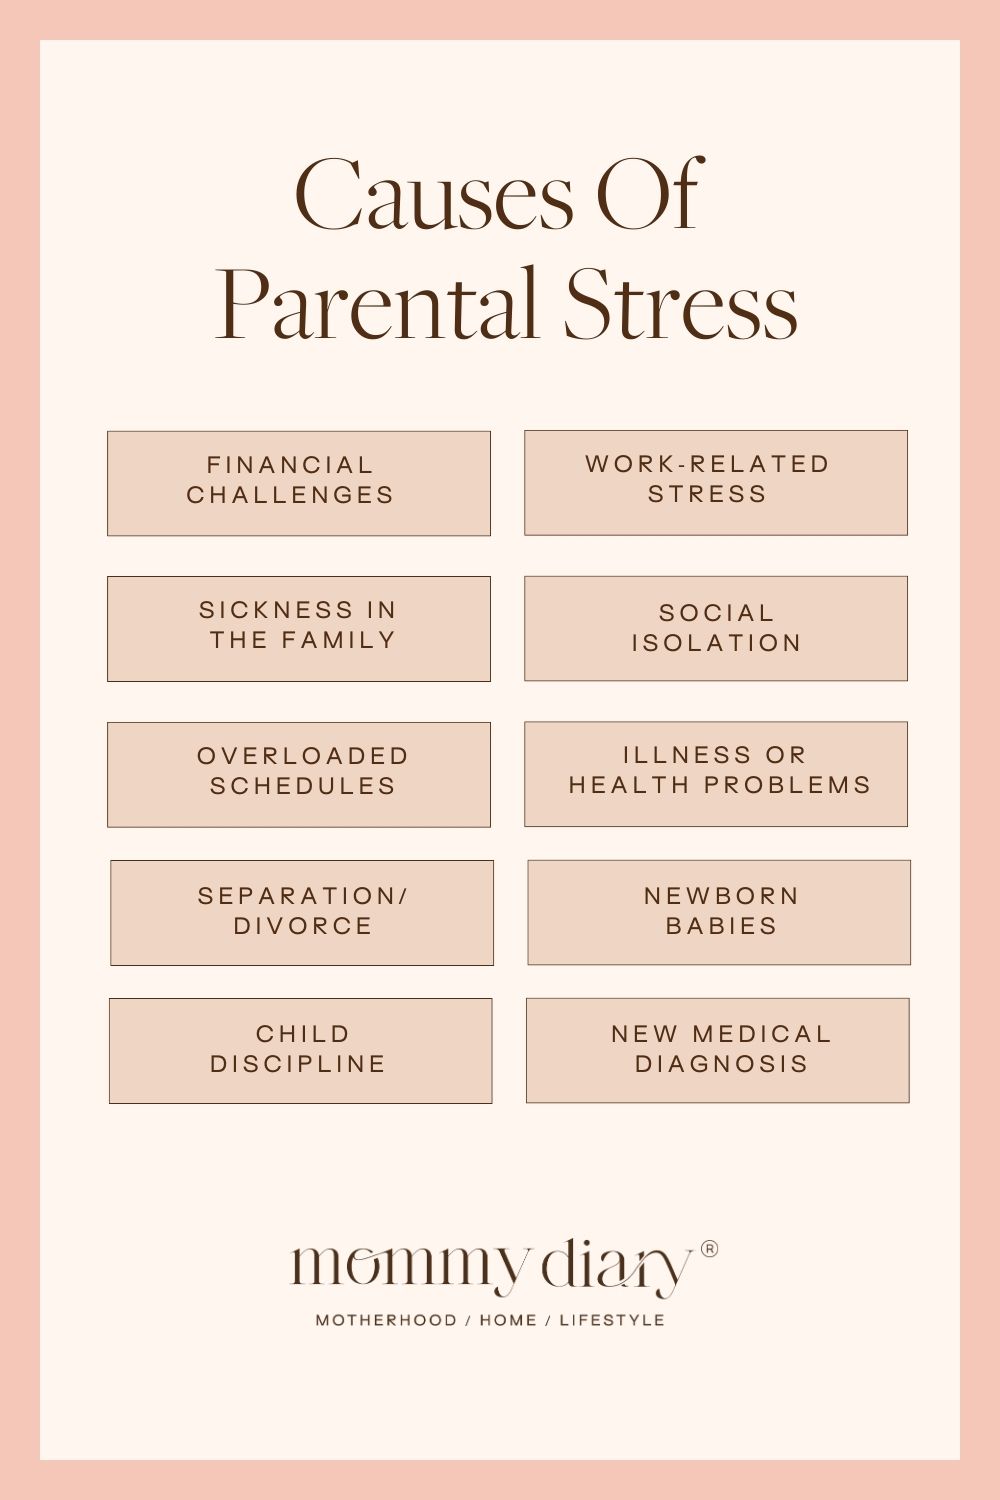 Causes of Parental Stress